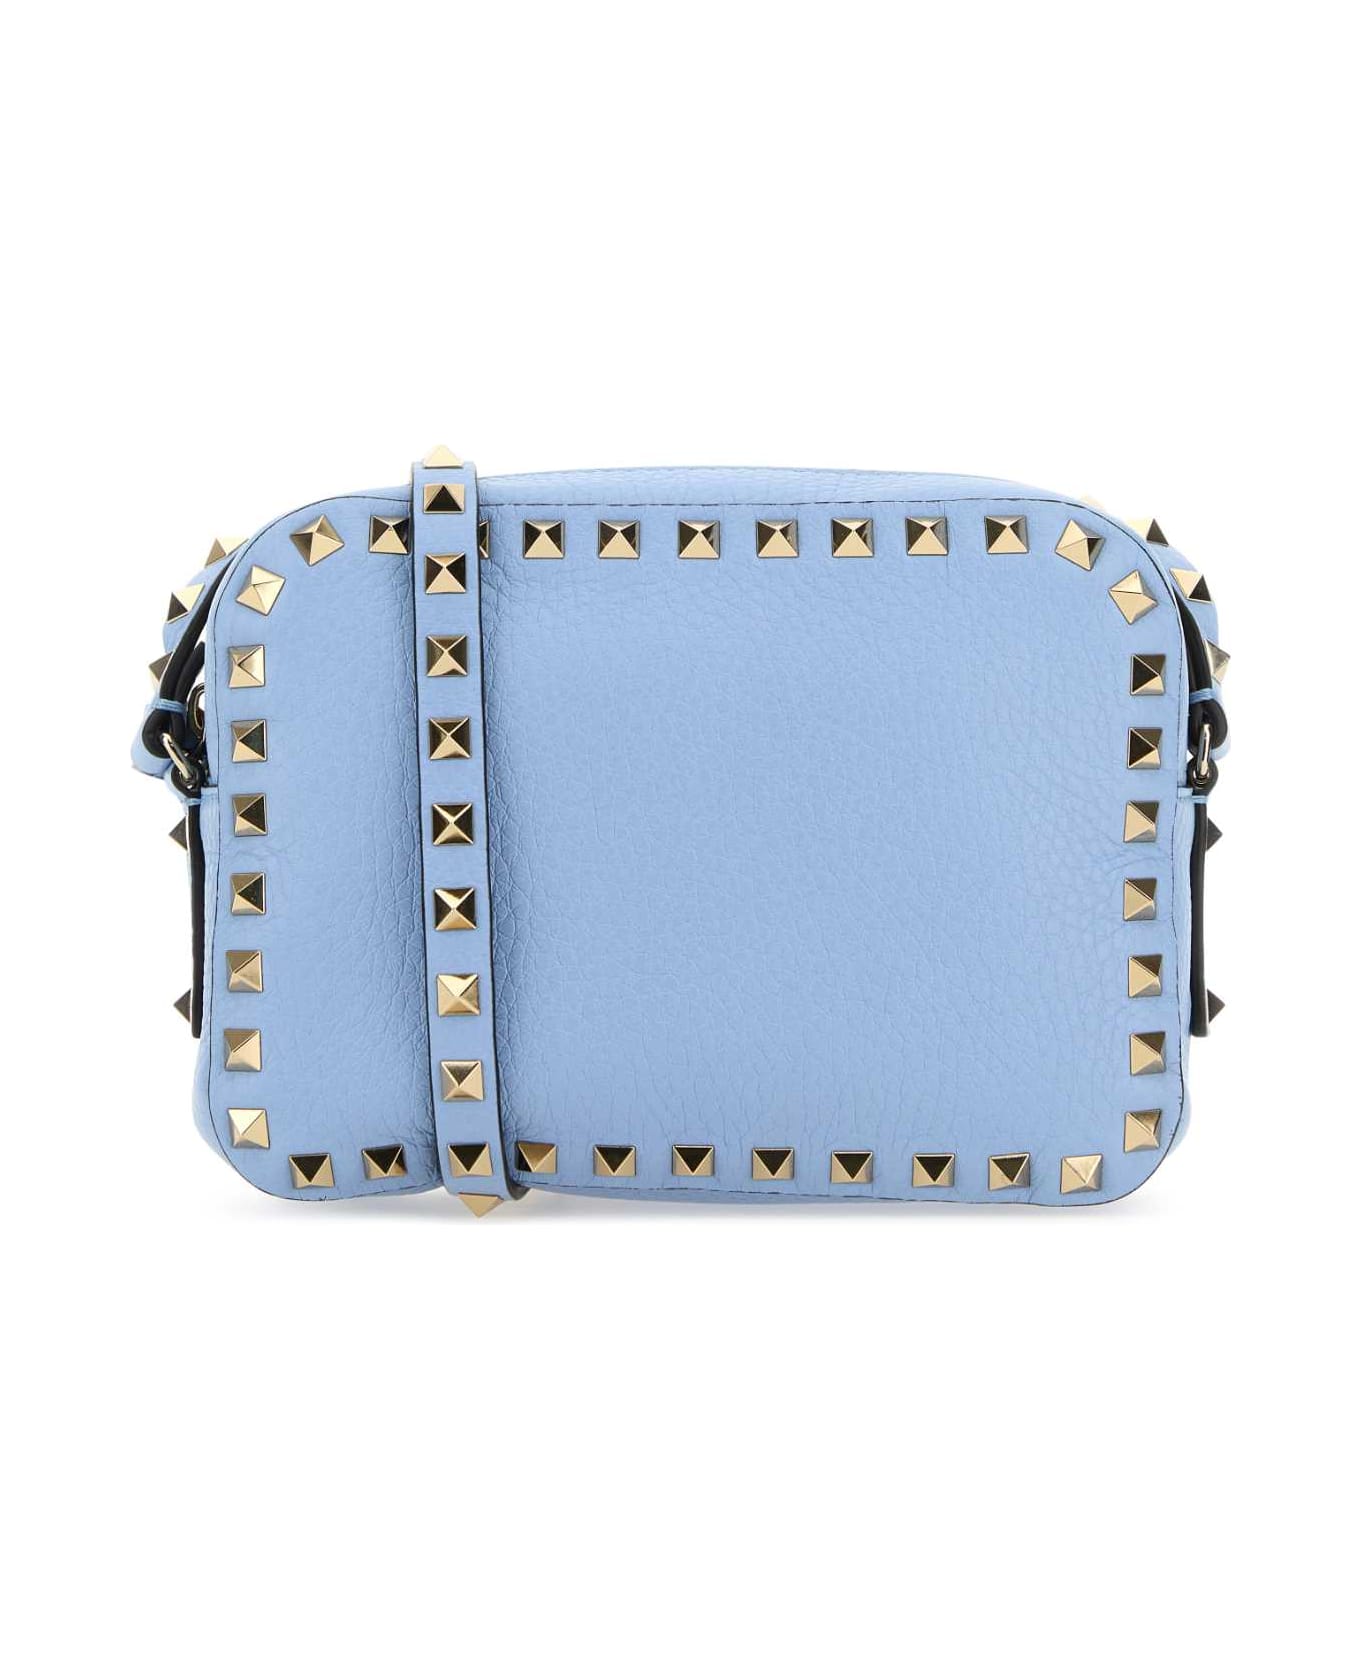 Valentino Garavani Light Blue Leather Rockstud Crossbody Bag - POPELINEBLUE